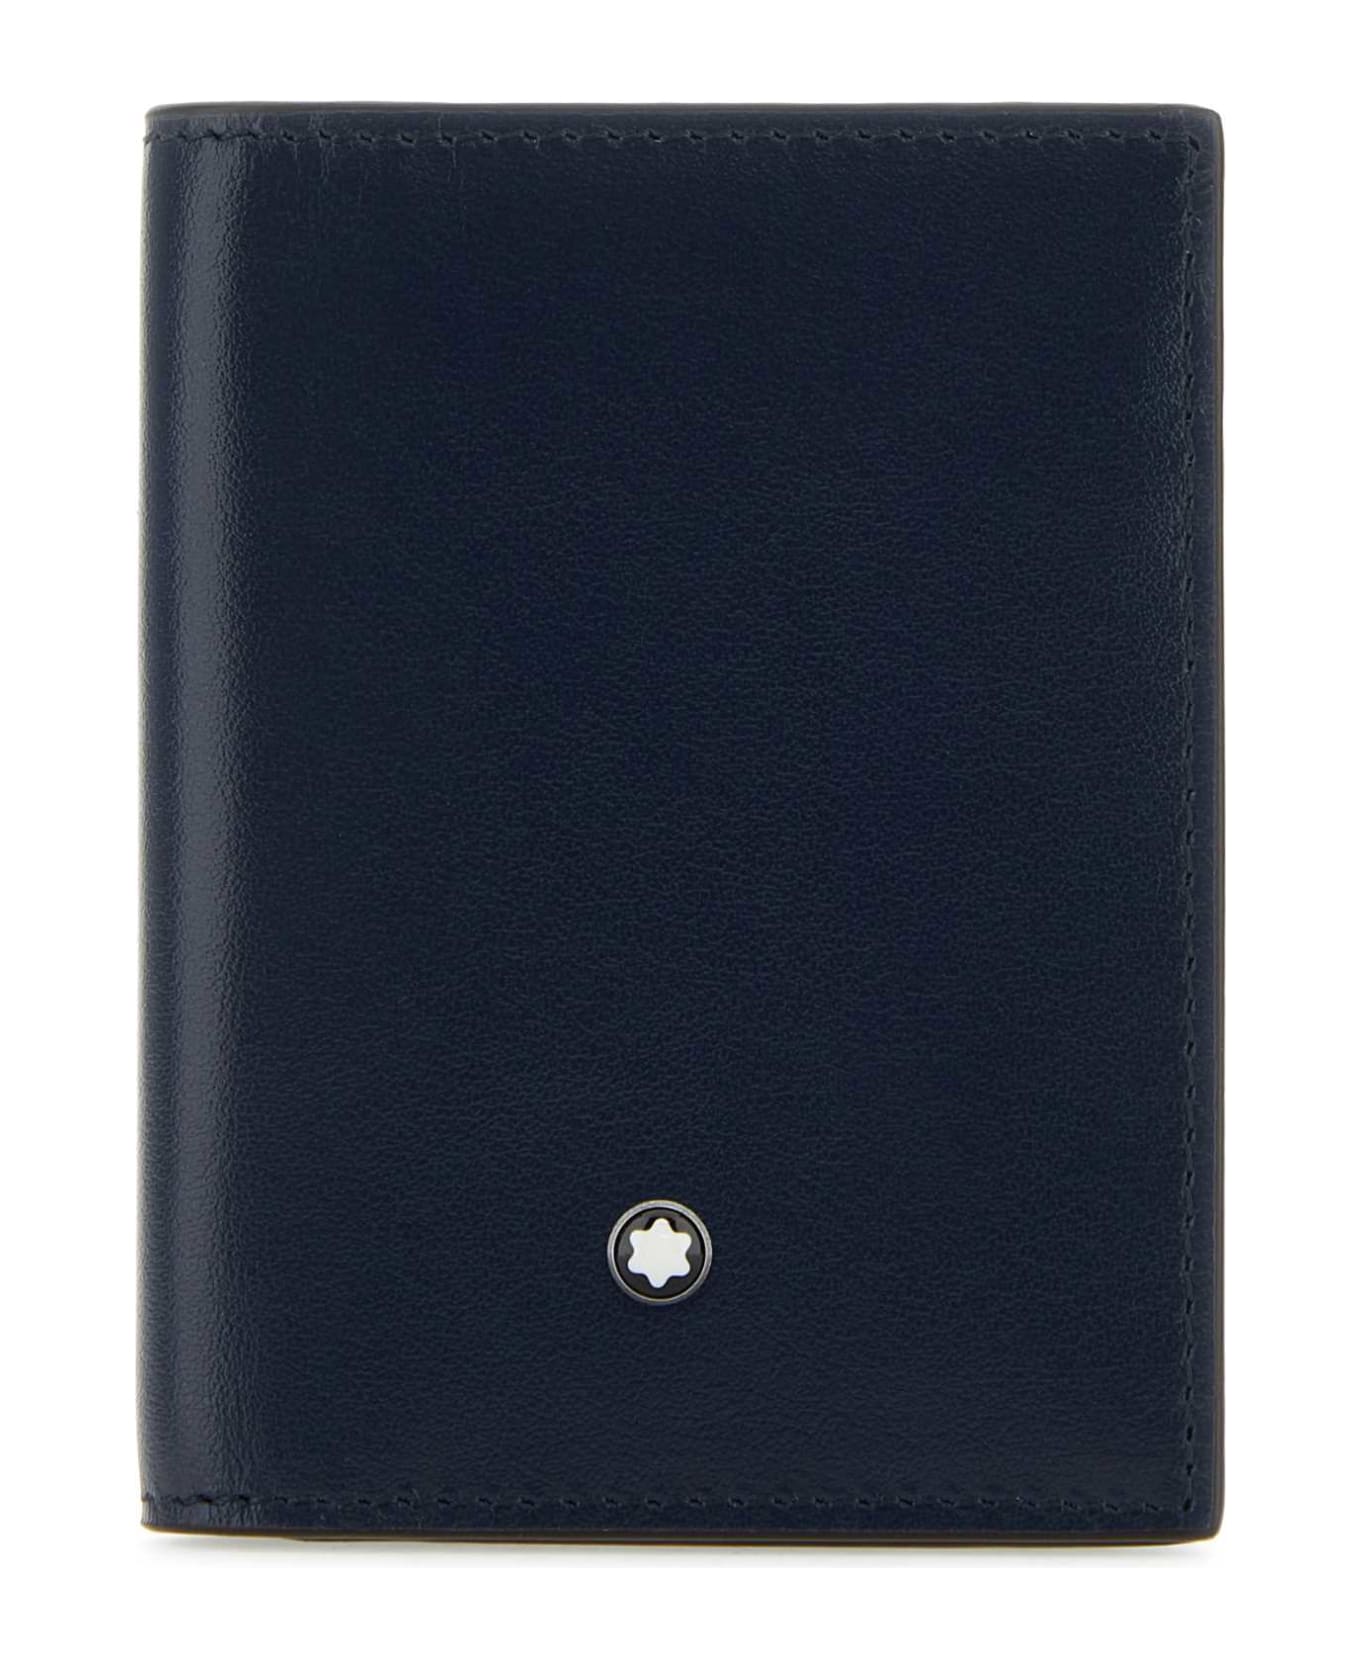 Montblanc Blue Leather Cardholder - INKBLUE